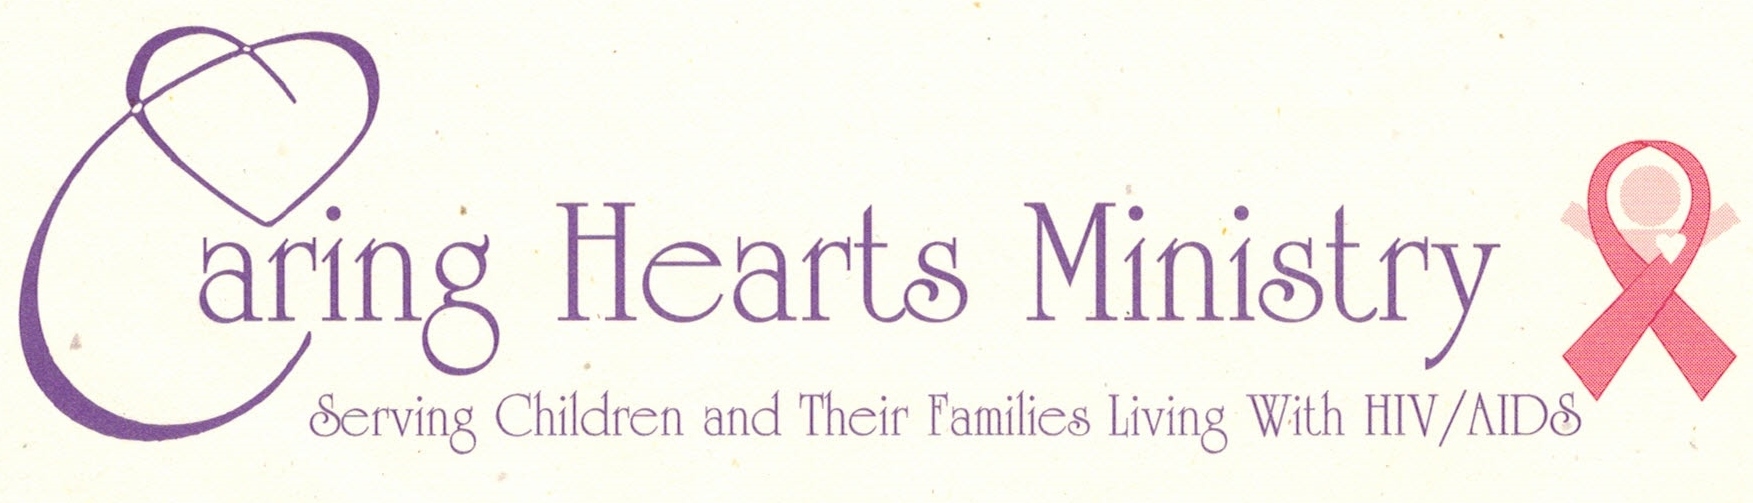 Caring Hearts Ministry - Logo from Letterhead - JPG.jpg